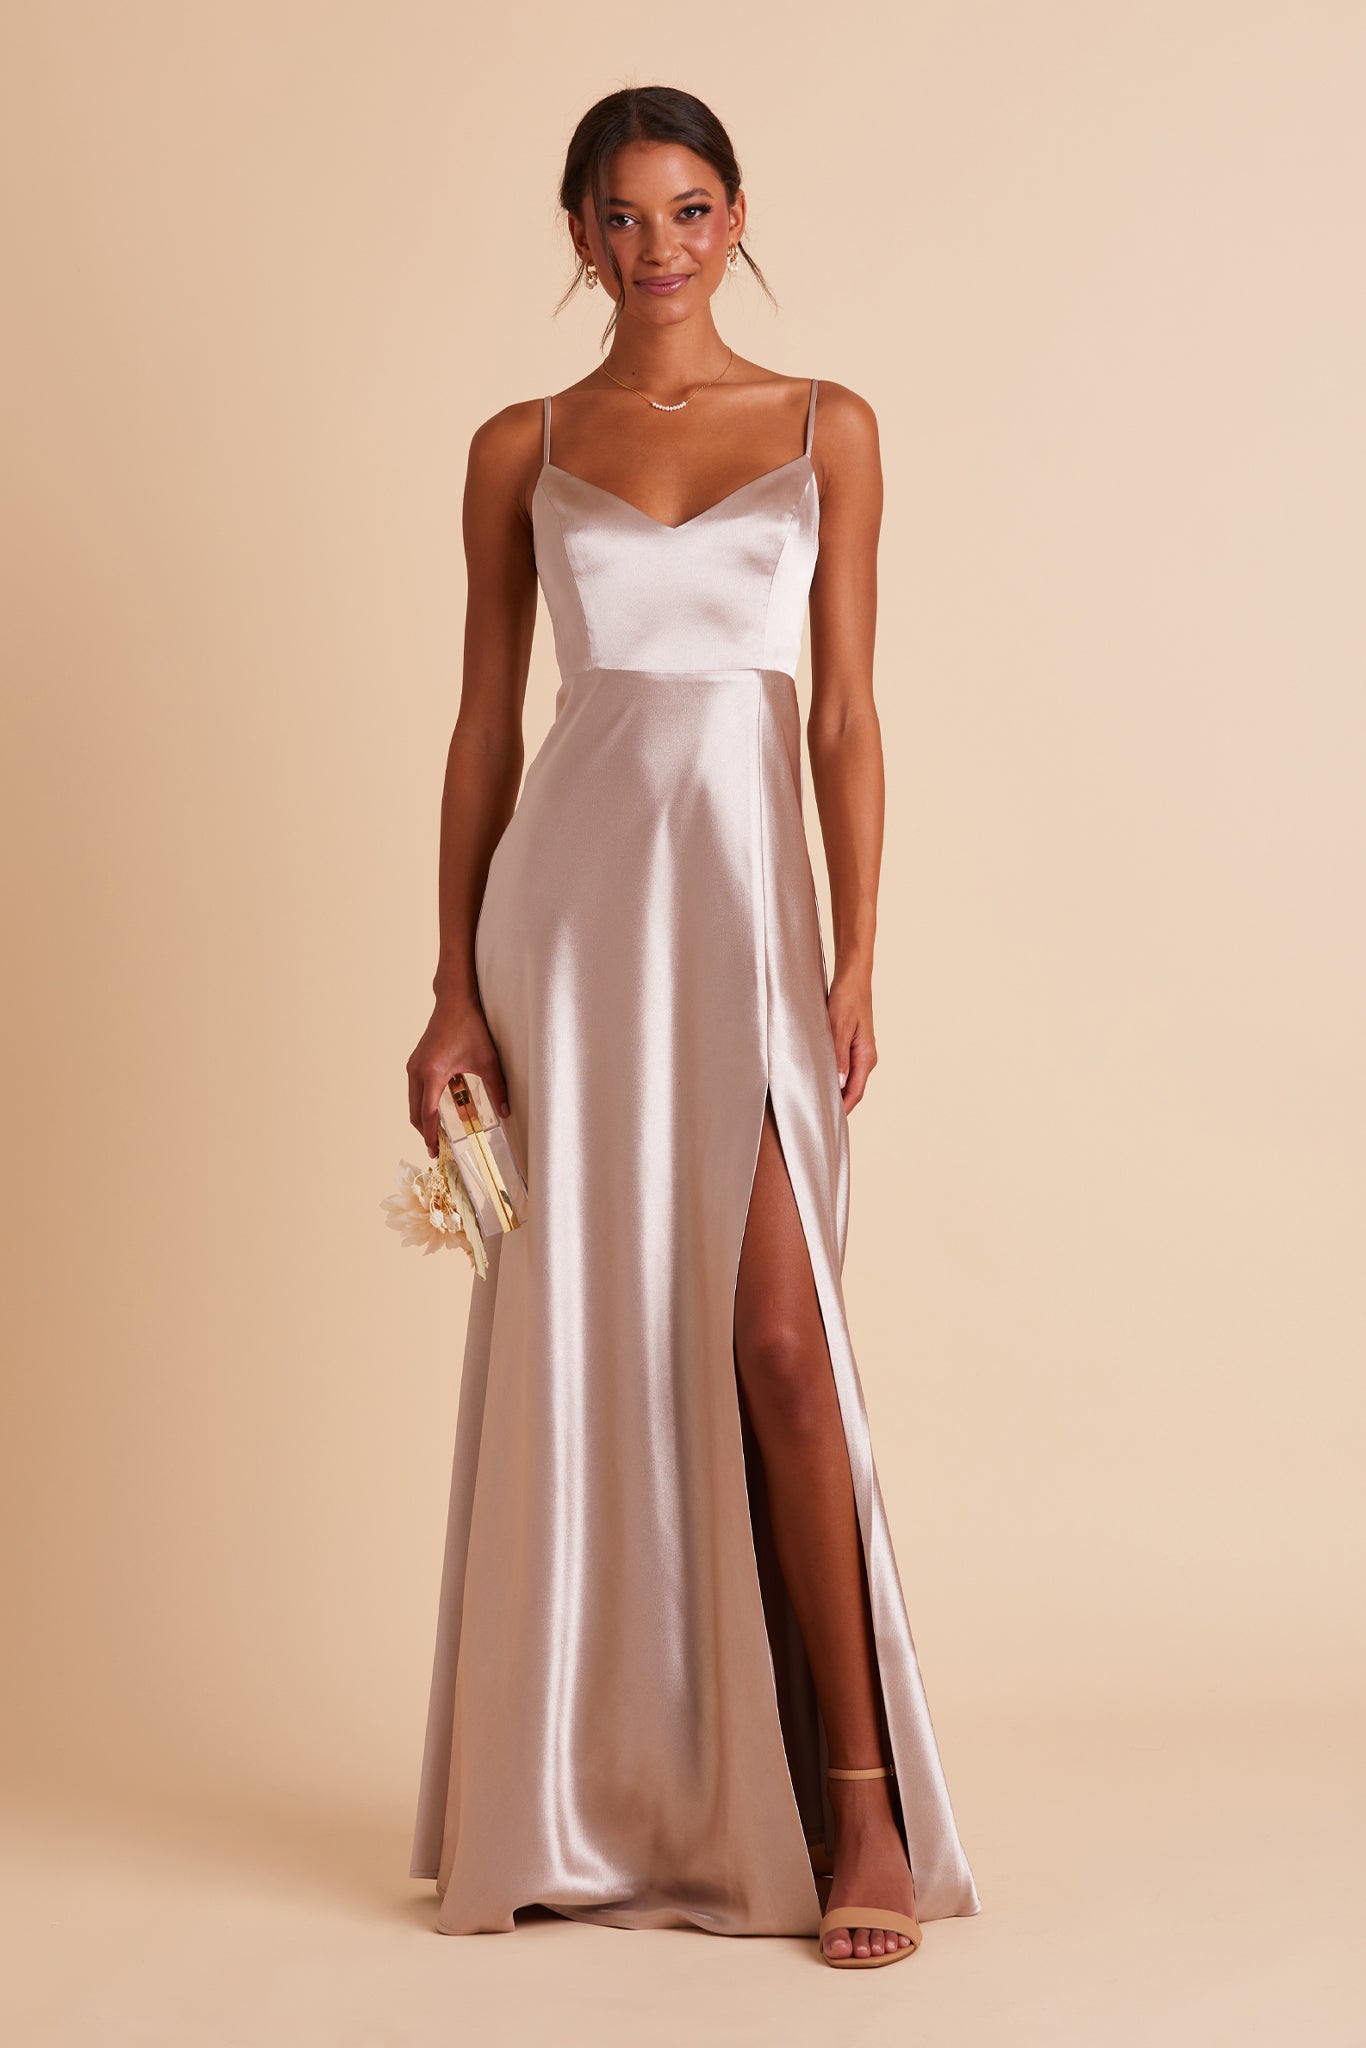 Jay Satin Bridesmaid Dress in Taupe | Birdy Grey